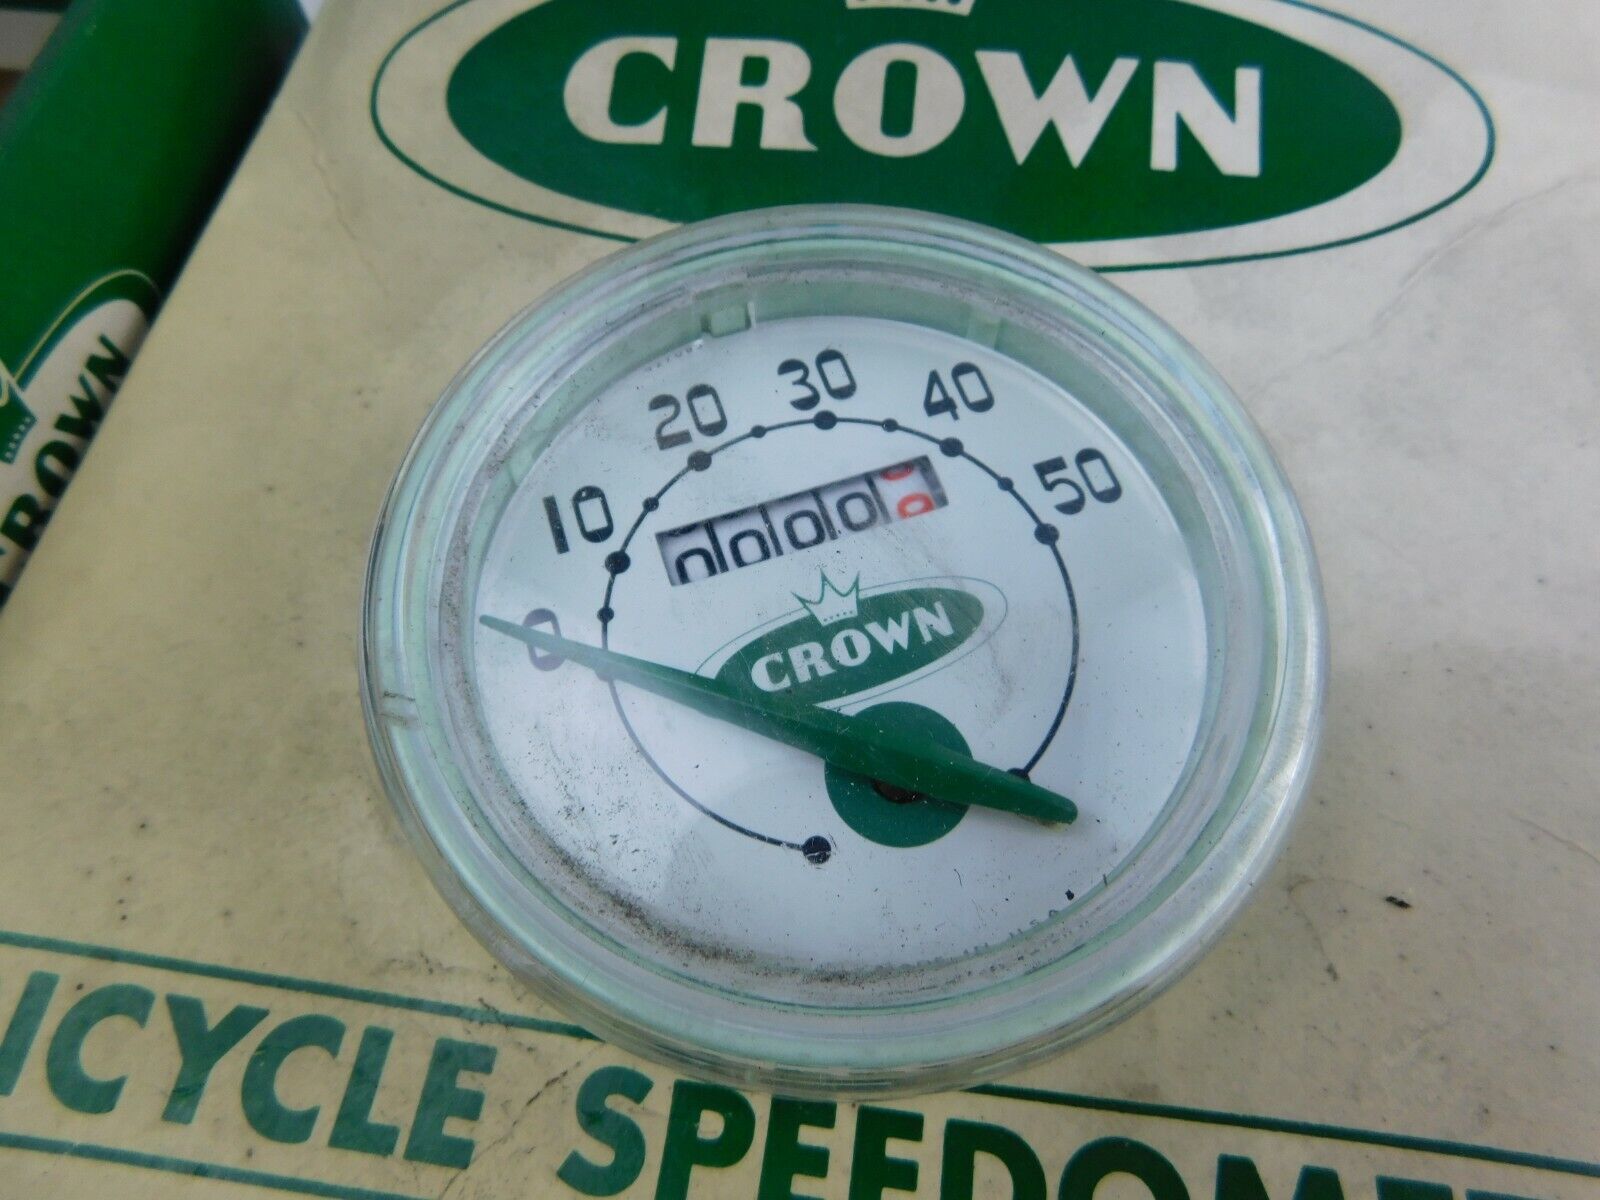 Crown Stewart Warner 50 MPH Bicycle Speedometer (Less Then 1 Mile) Original Box